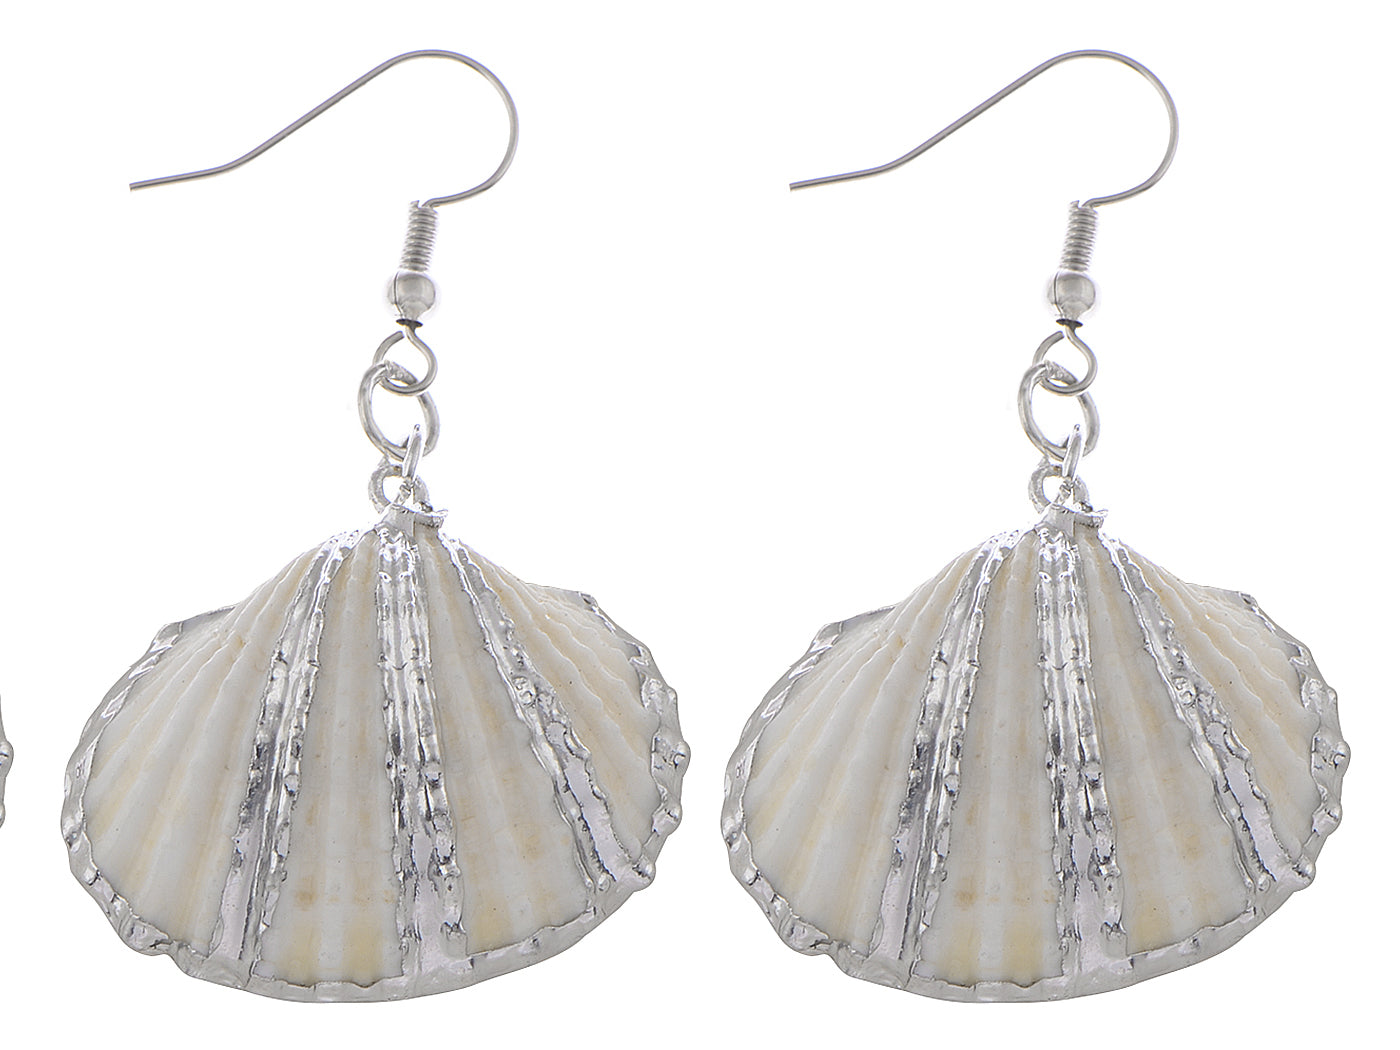 Seashell Half Shells Ocean Inspo Design Drop Earrings